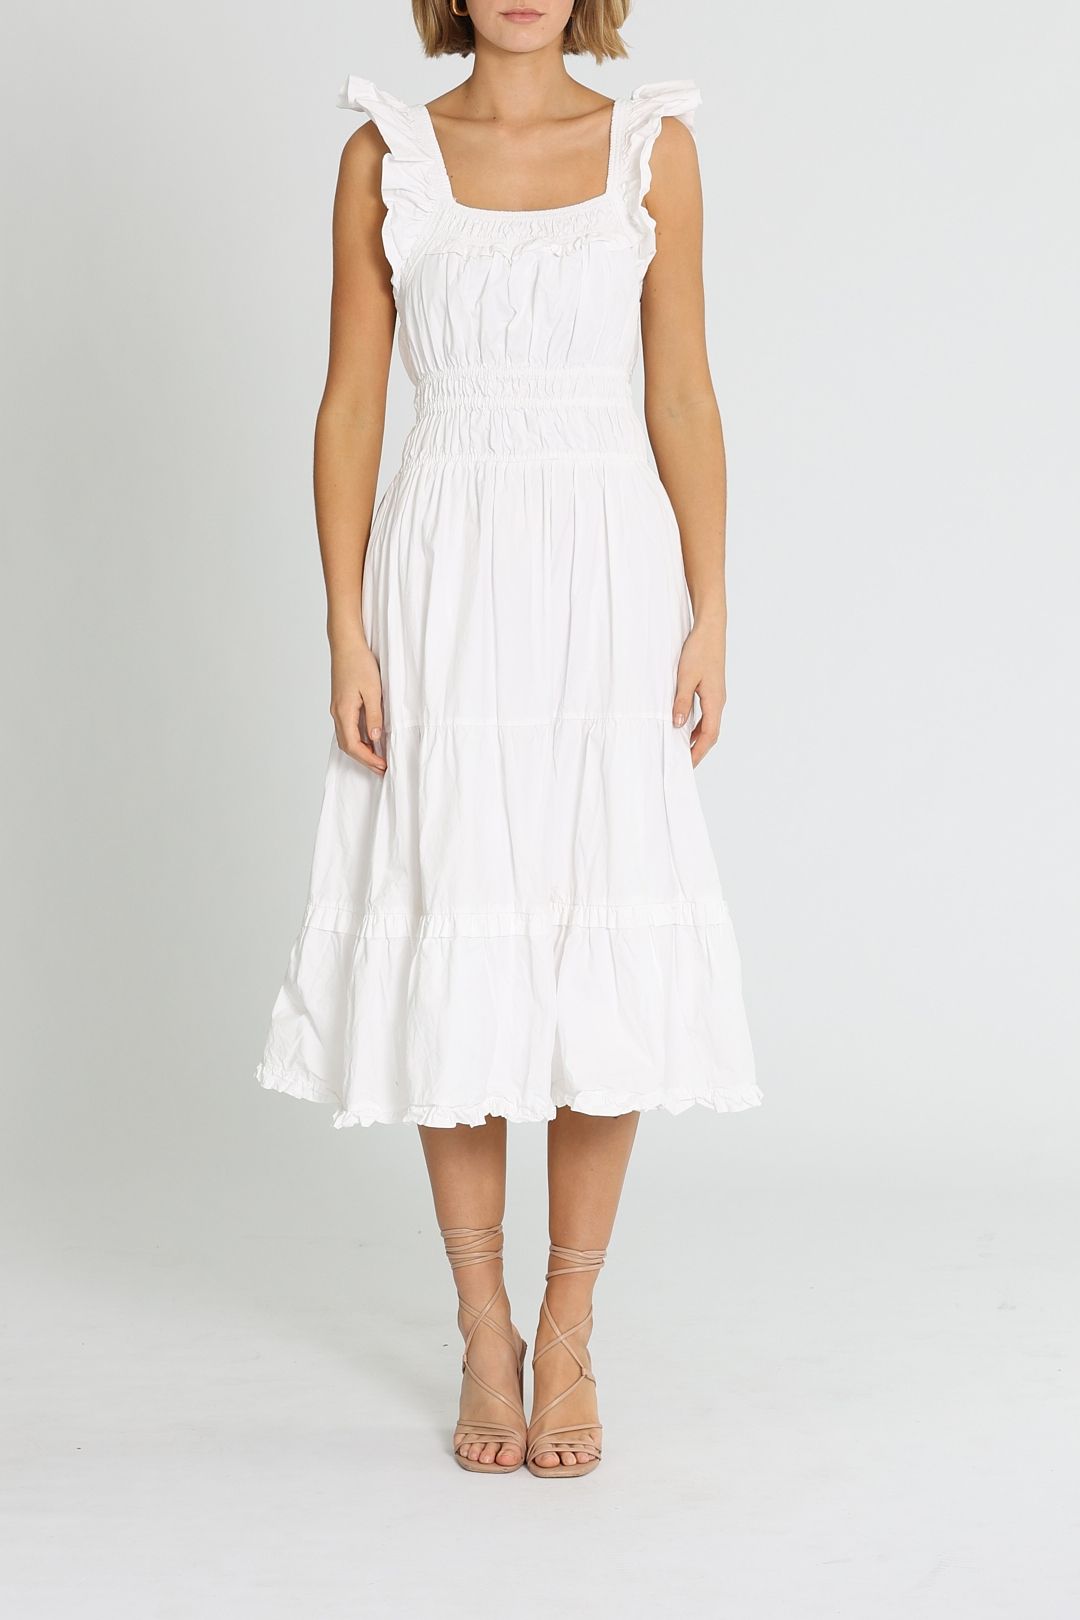 Magali Pascal Jeanette Dress White